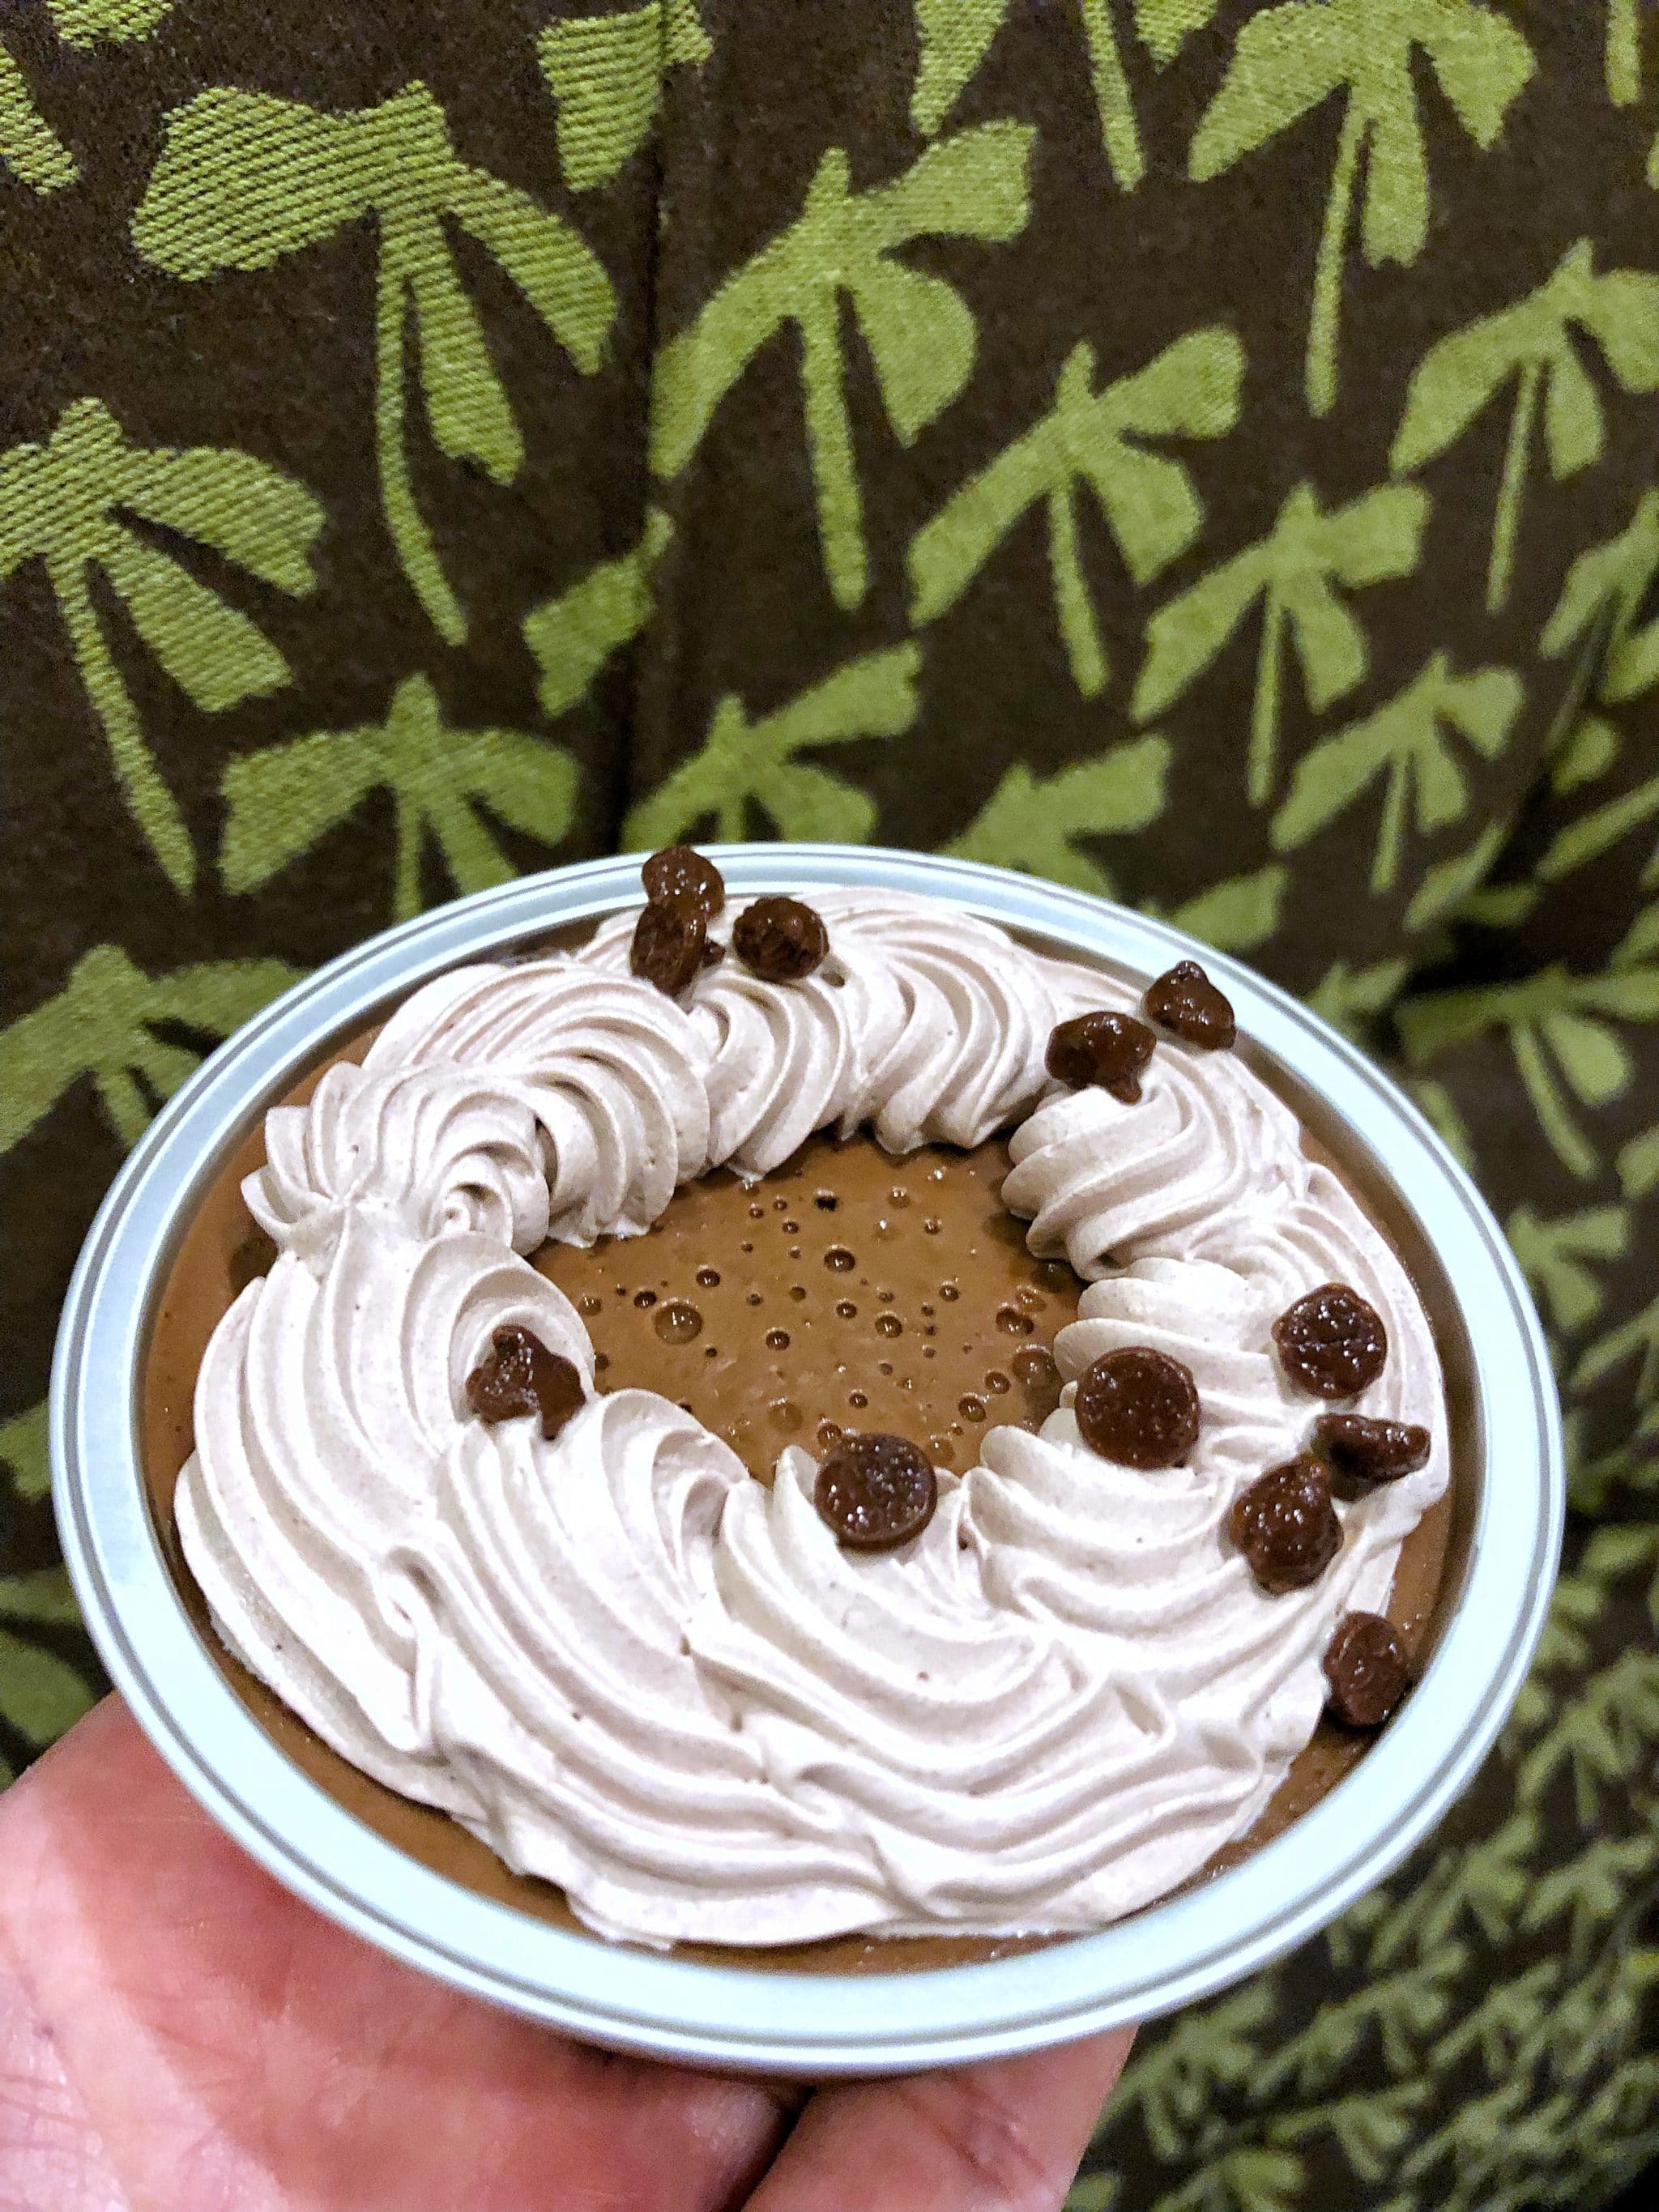 Vegan Chocolate Coconut Pot de Creme Dessert at Disney’s Grand Floridian Resort at Walt Disney World